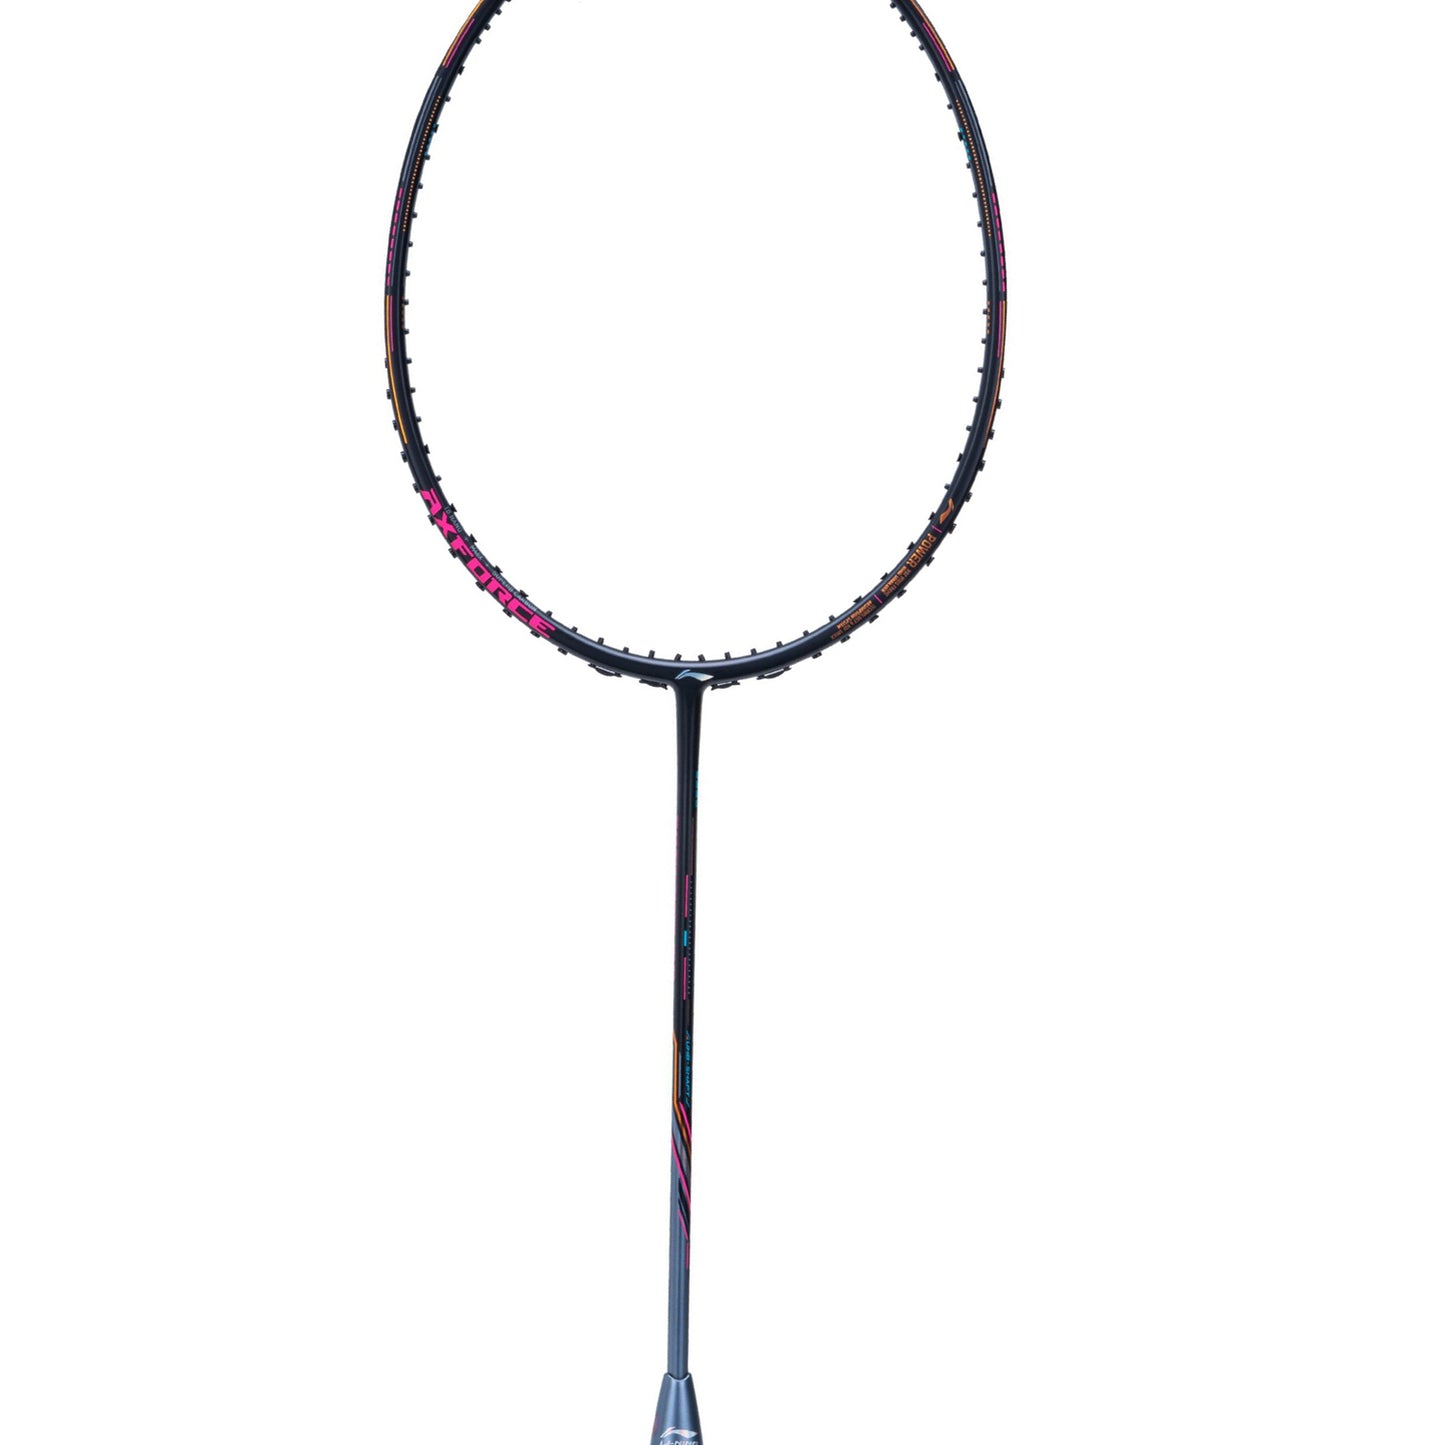 Li-Ning AXFORCE 80 4U Unstrung Professional Badminton Racquet - Grey - Best Price online Prokicksports.com